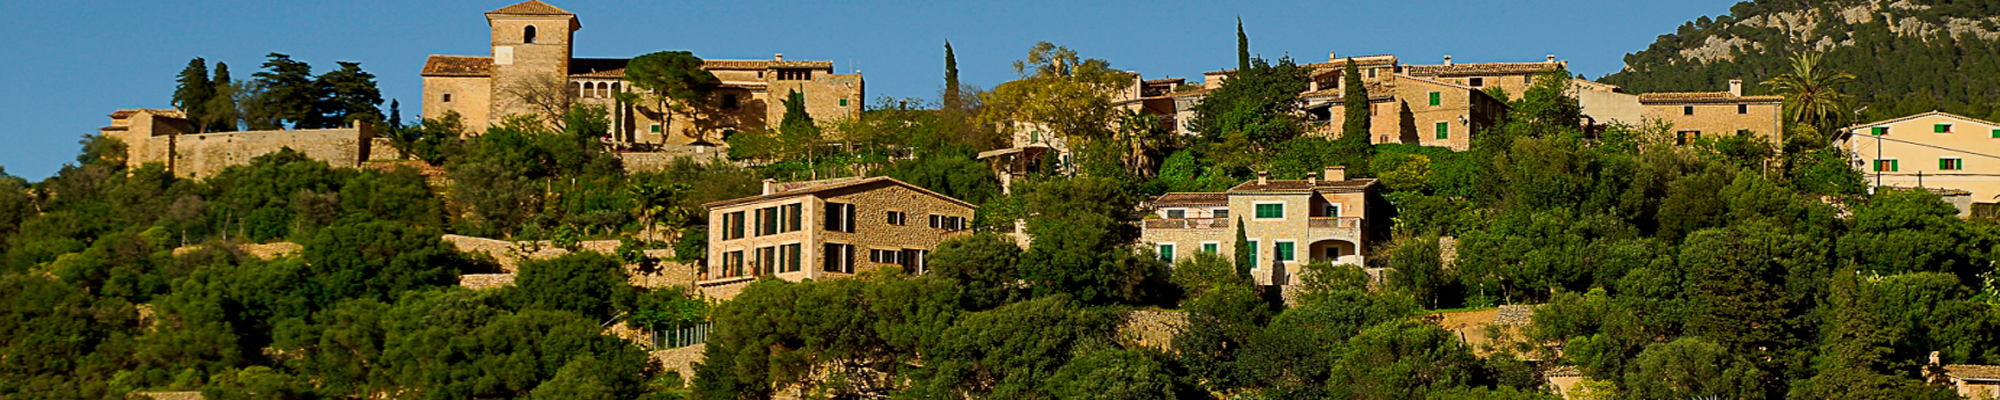 Inmobiliaria MI House su agencia de confianza Islas Baleares. MI HOUSE en Palma de Mallorca